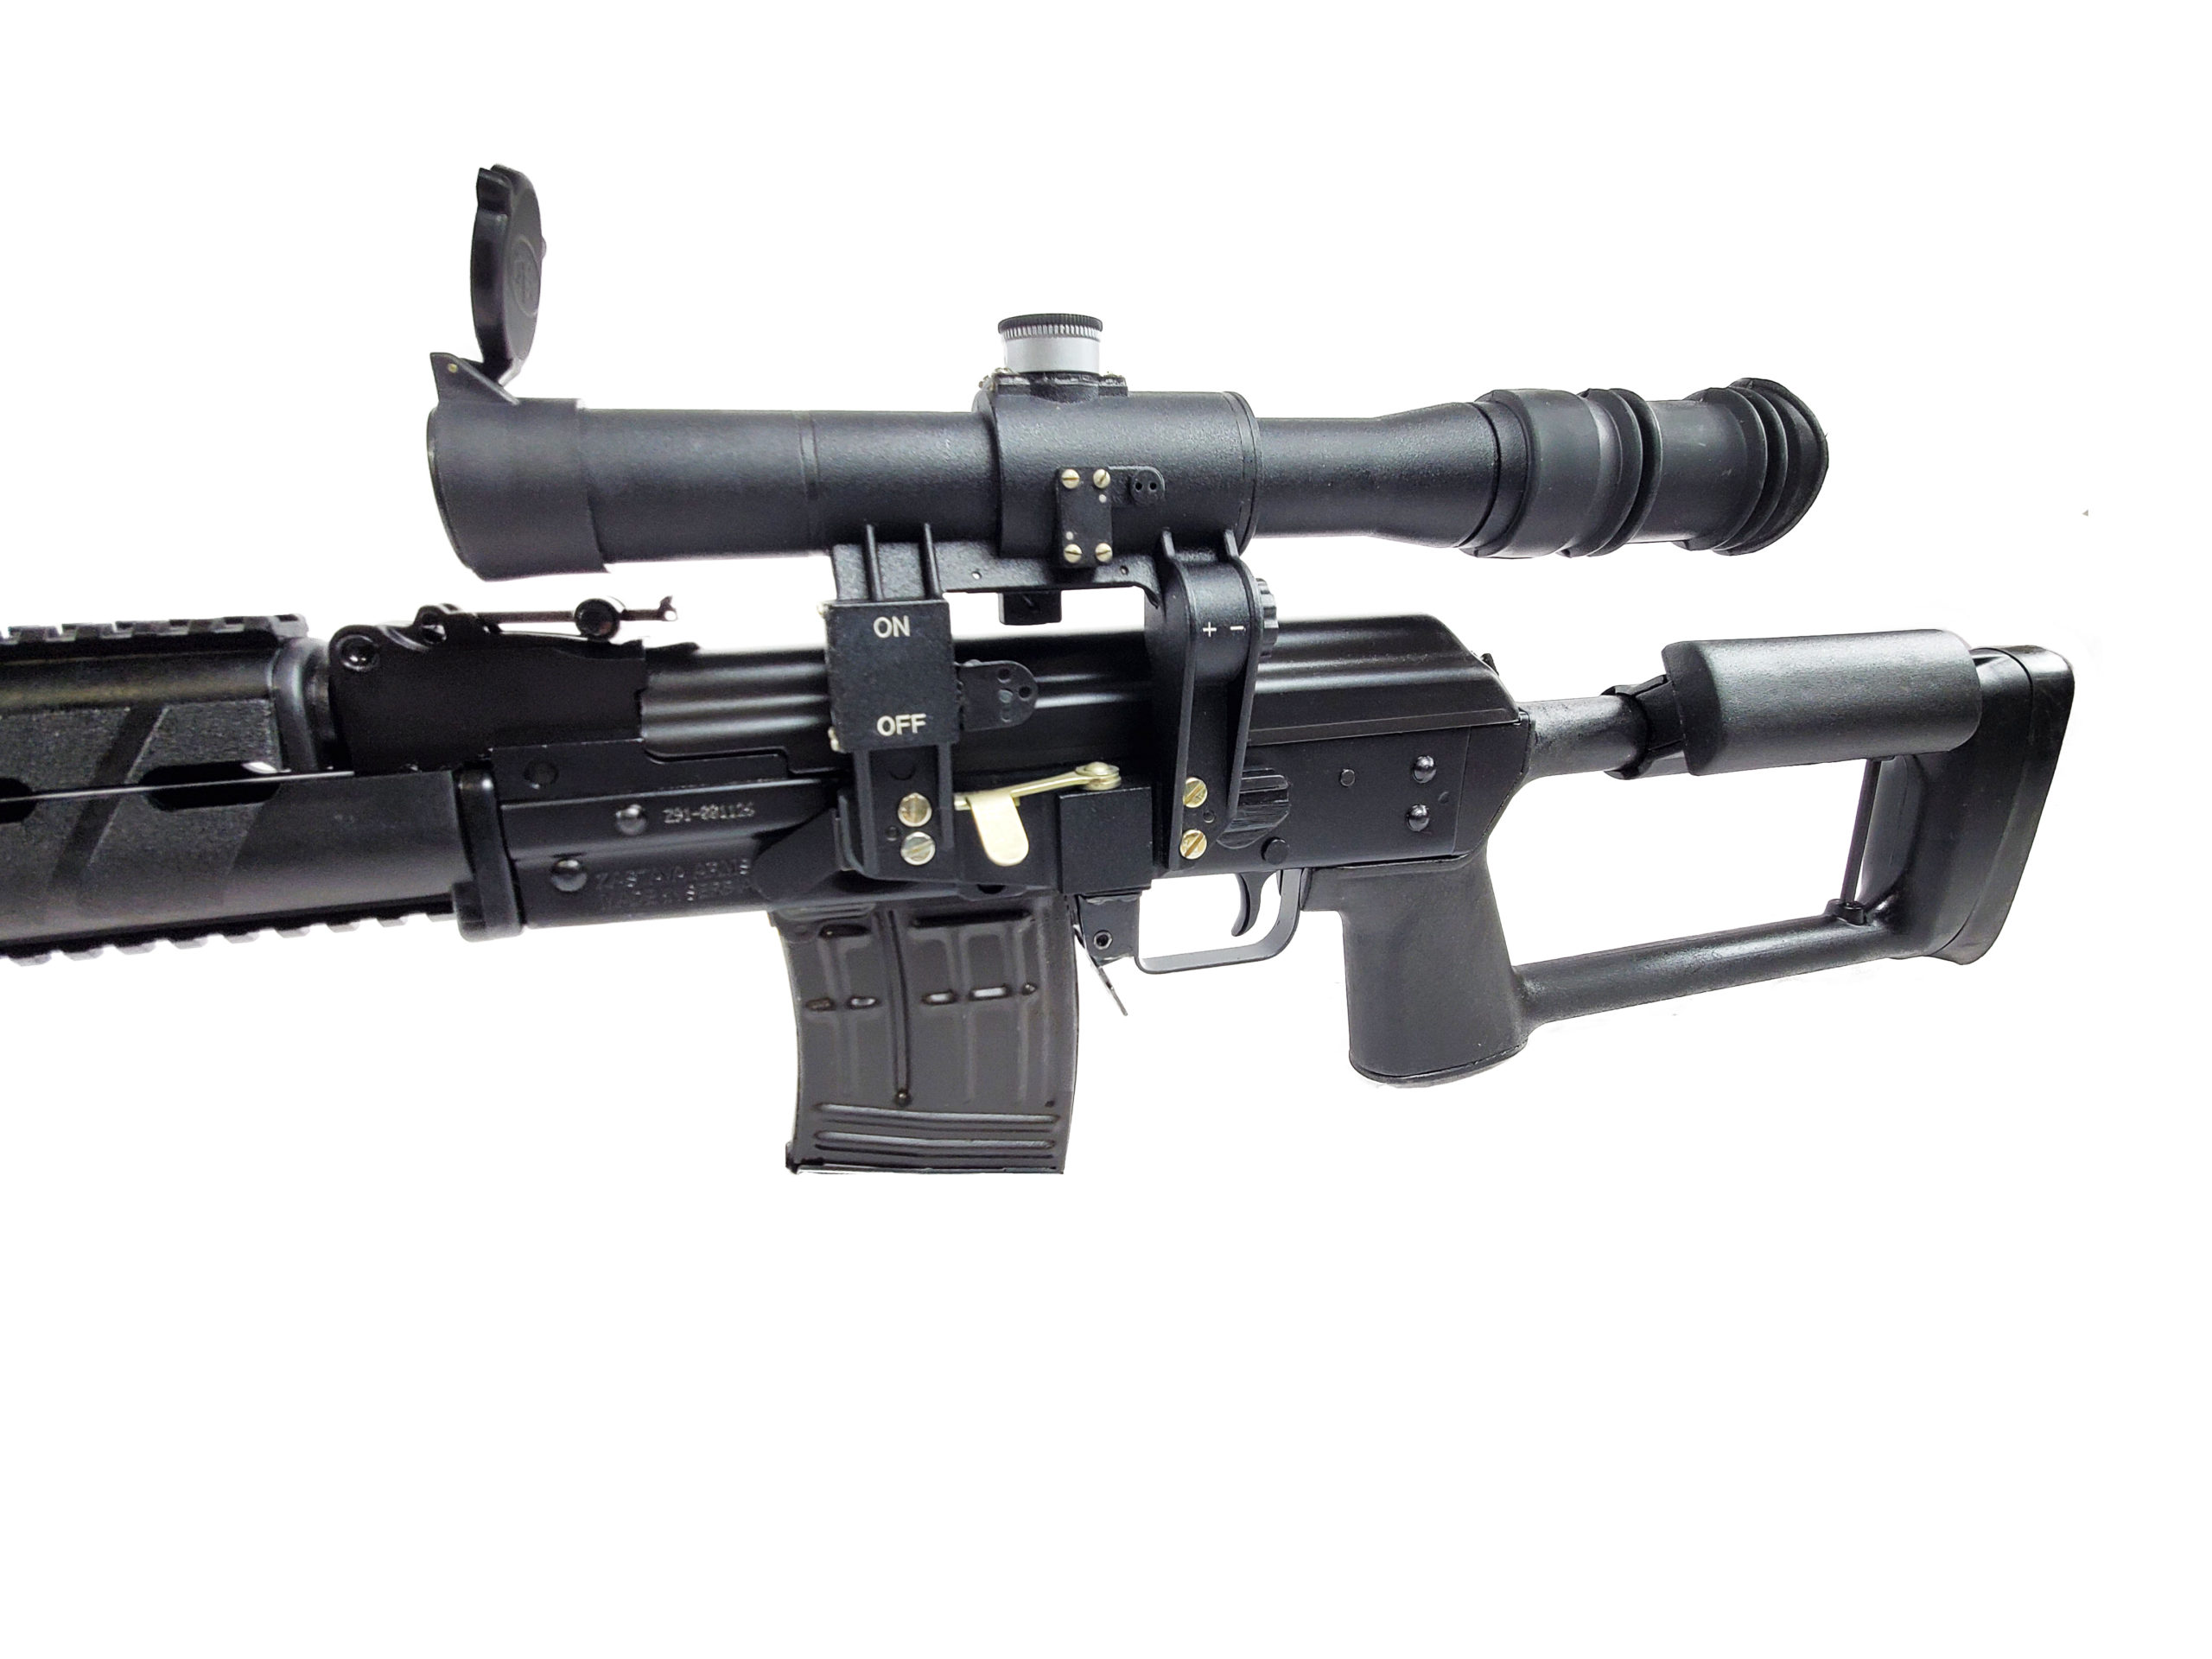 M91 sniper rifle POSP 4X24 SCOPE Ergonomic Stock